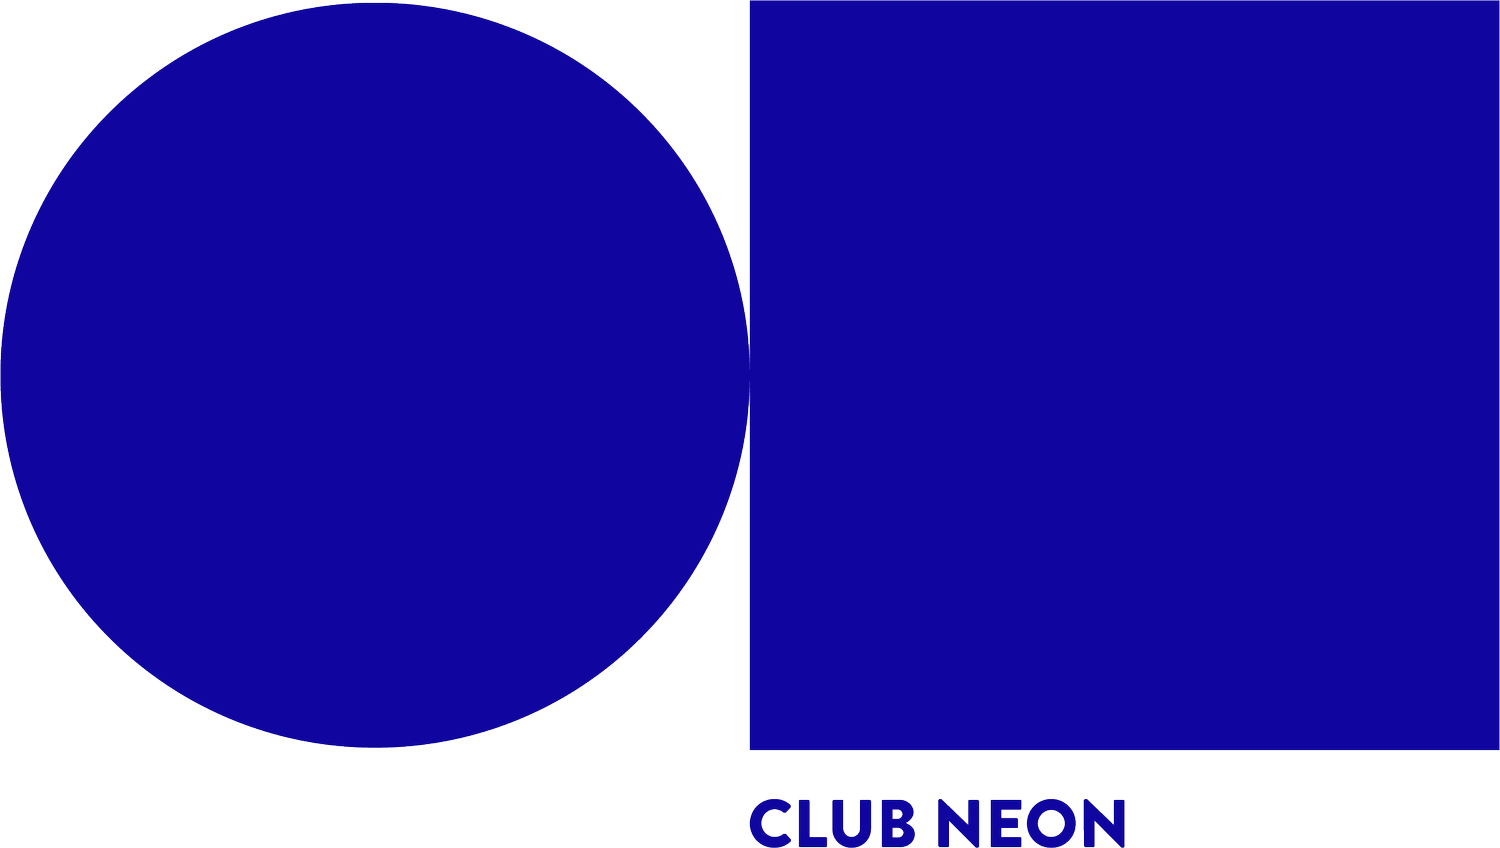 CLUB NEON